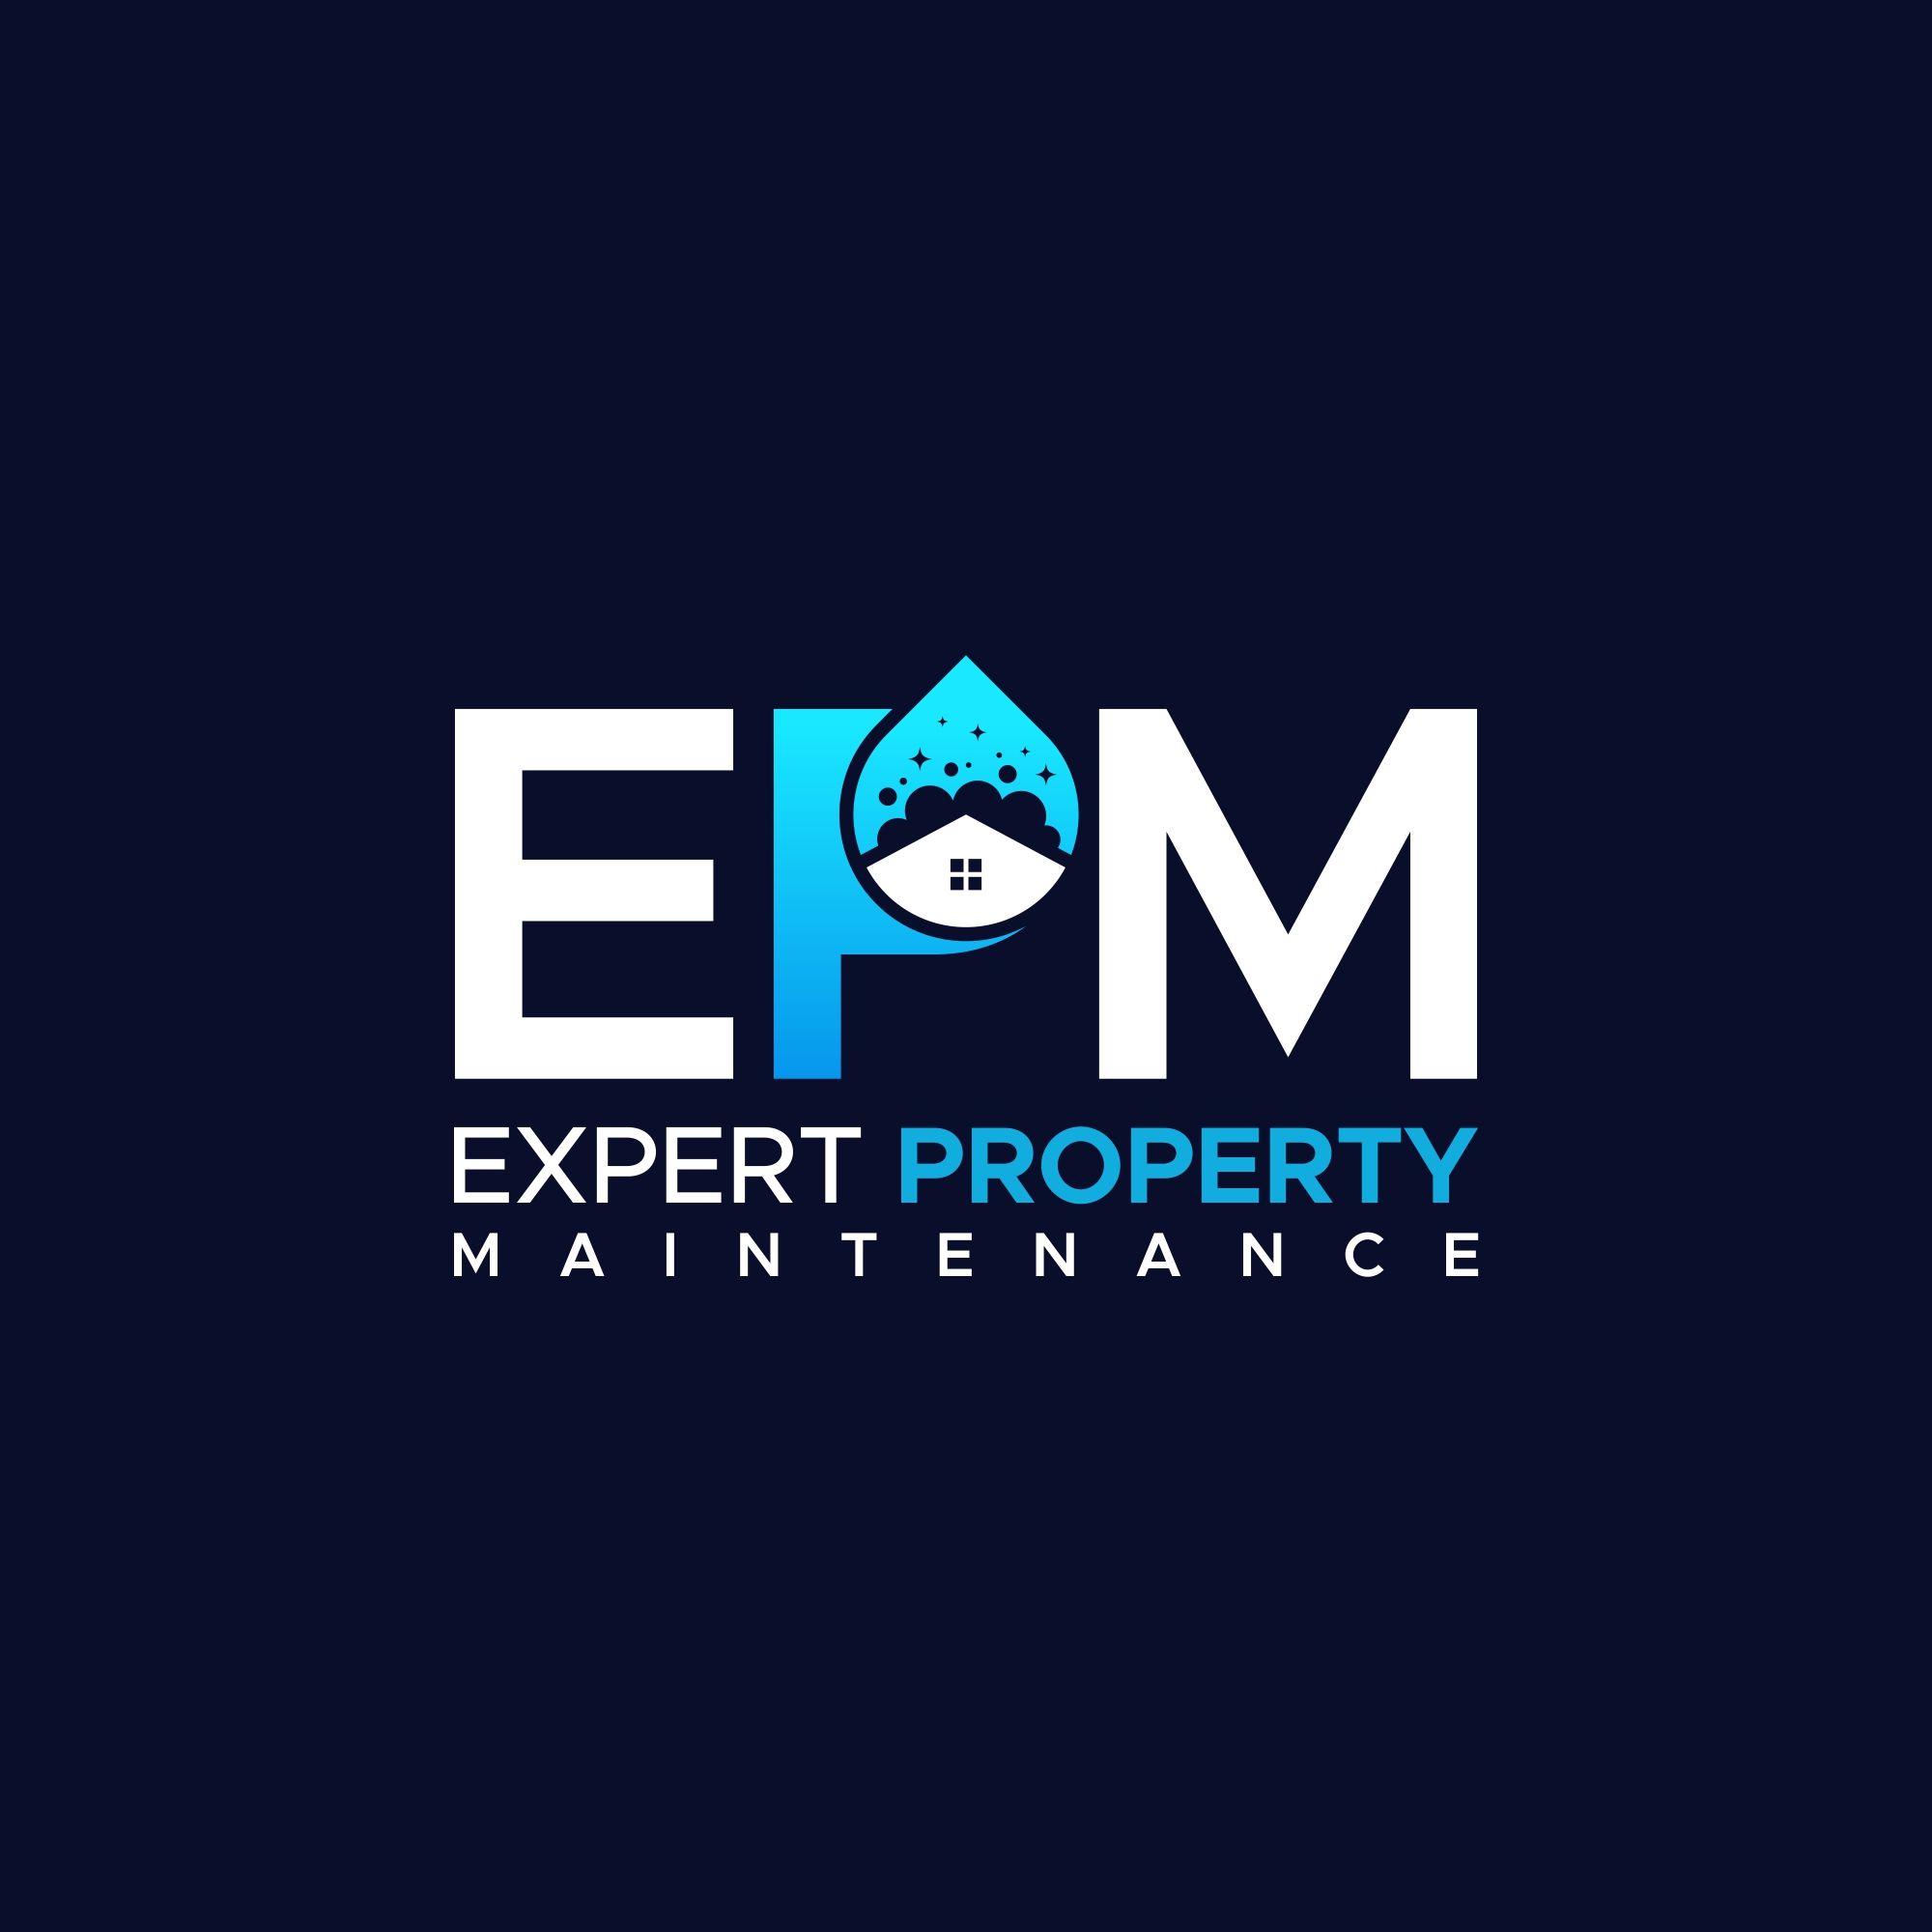 Expert Property Maintenance Logo